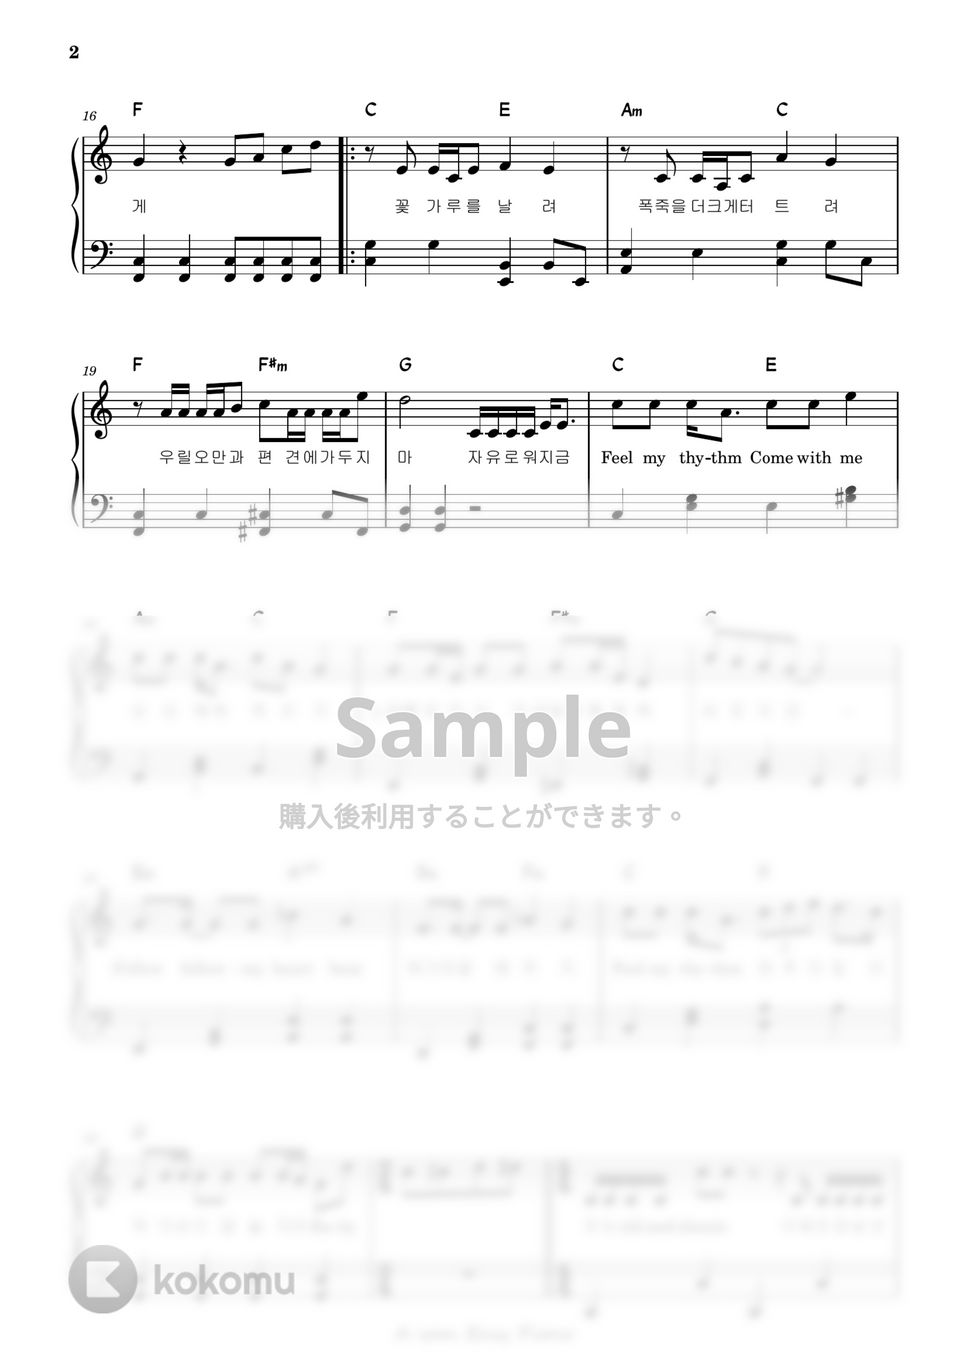 Red Velvet - Feel My Rhythm (ピアノ両手 / 初心者 / 韓国語歌詞付き) by A-sam